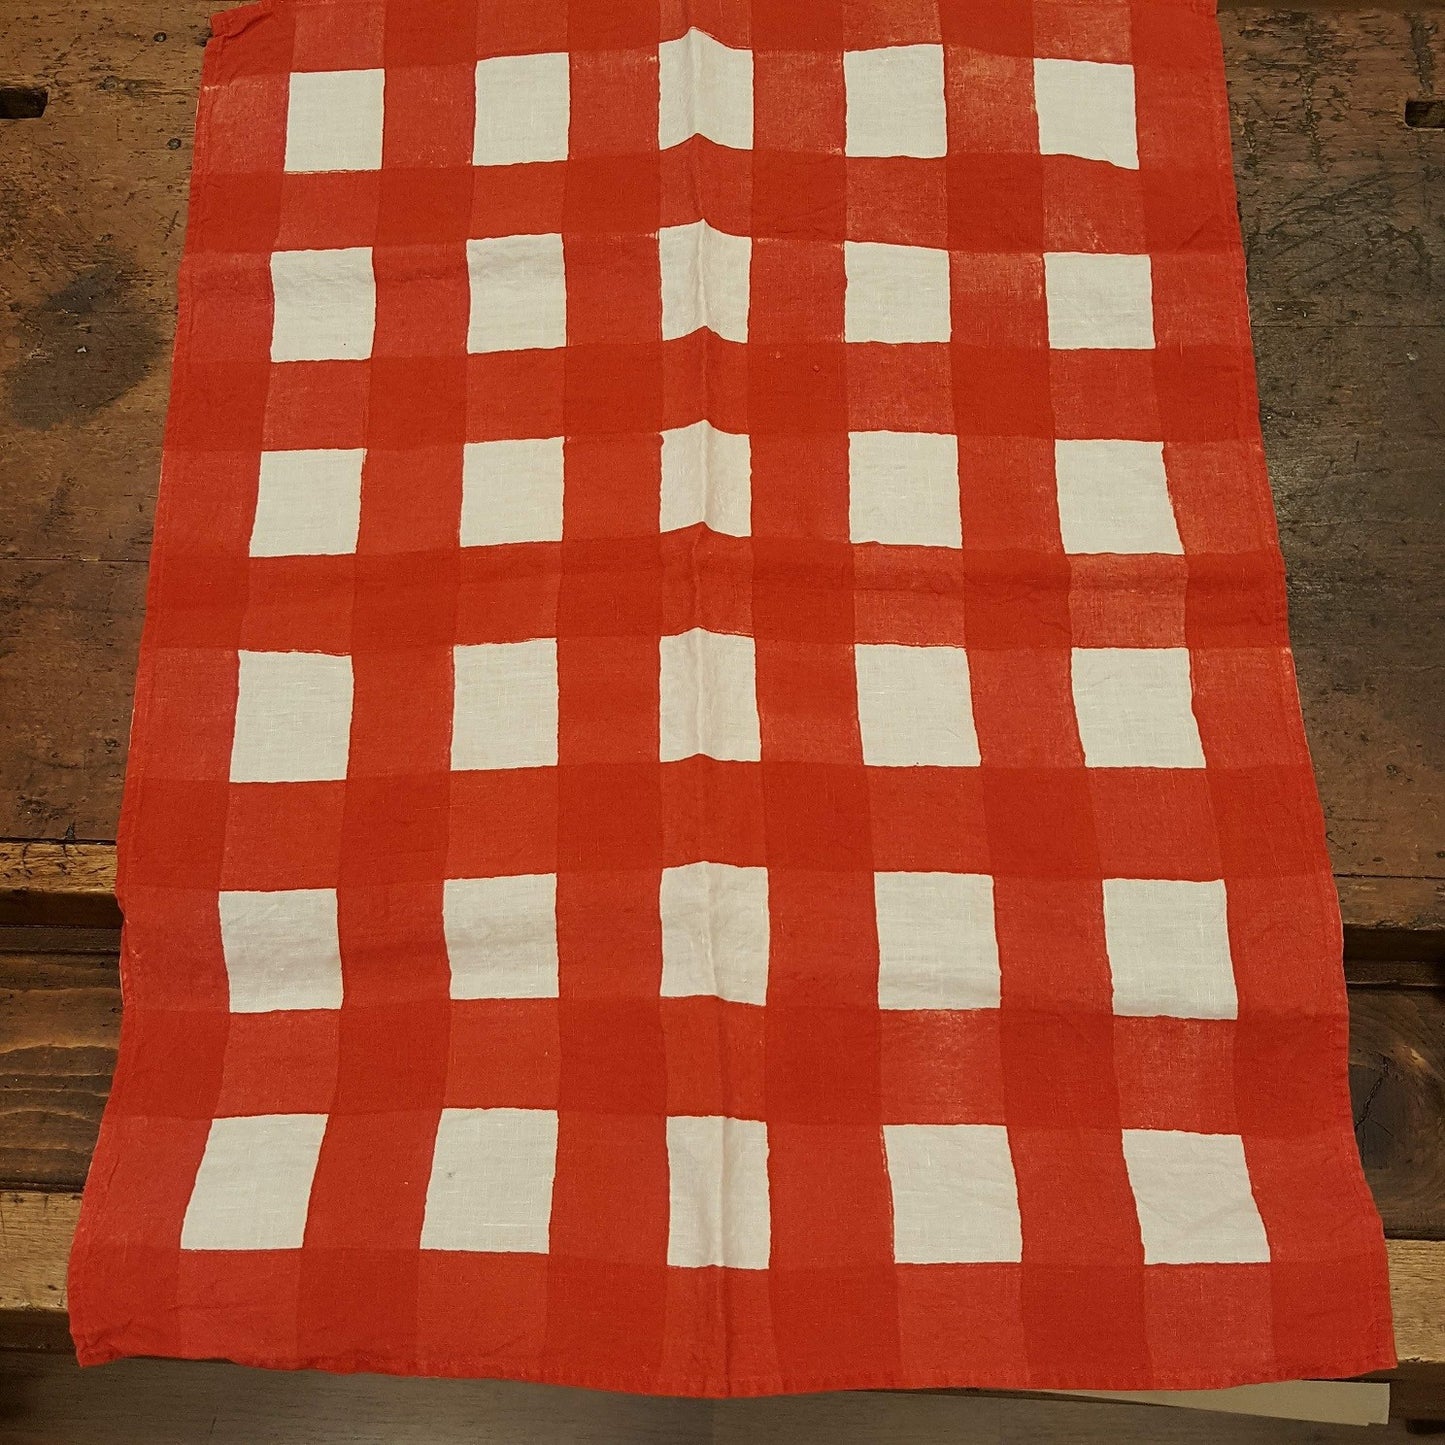 Linen placemat/tea towel from the Quadrettato collection